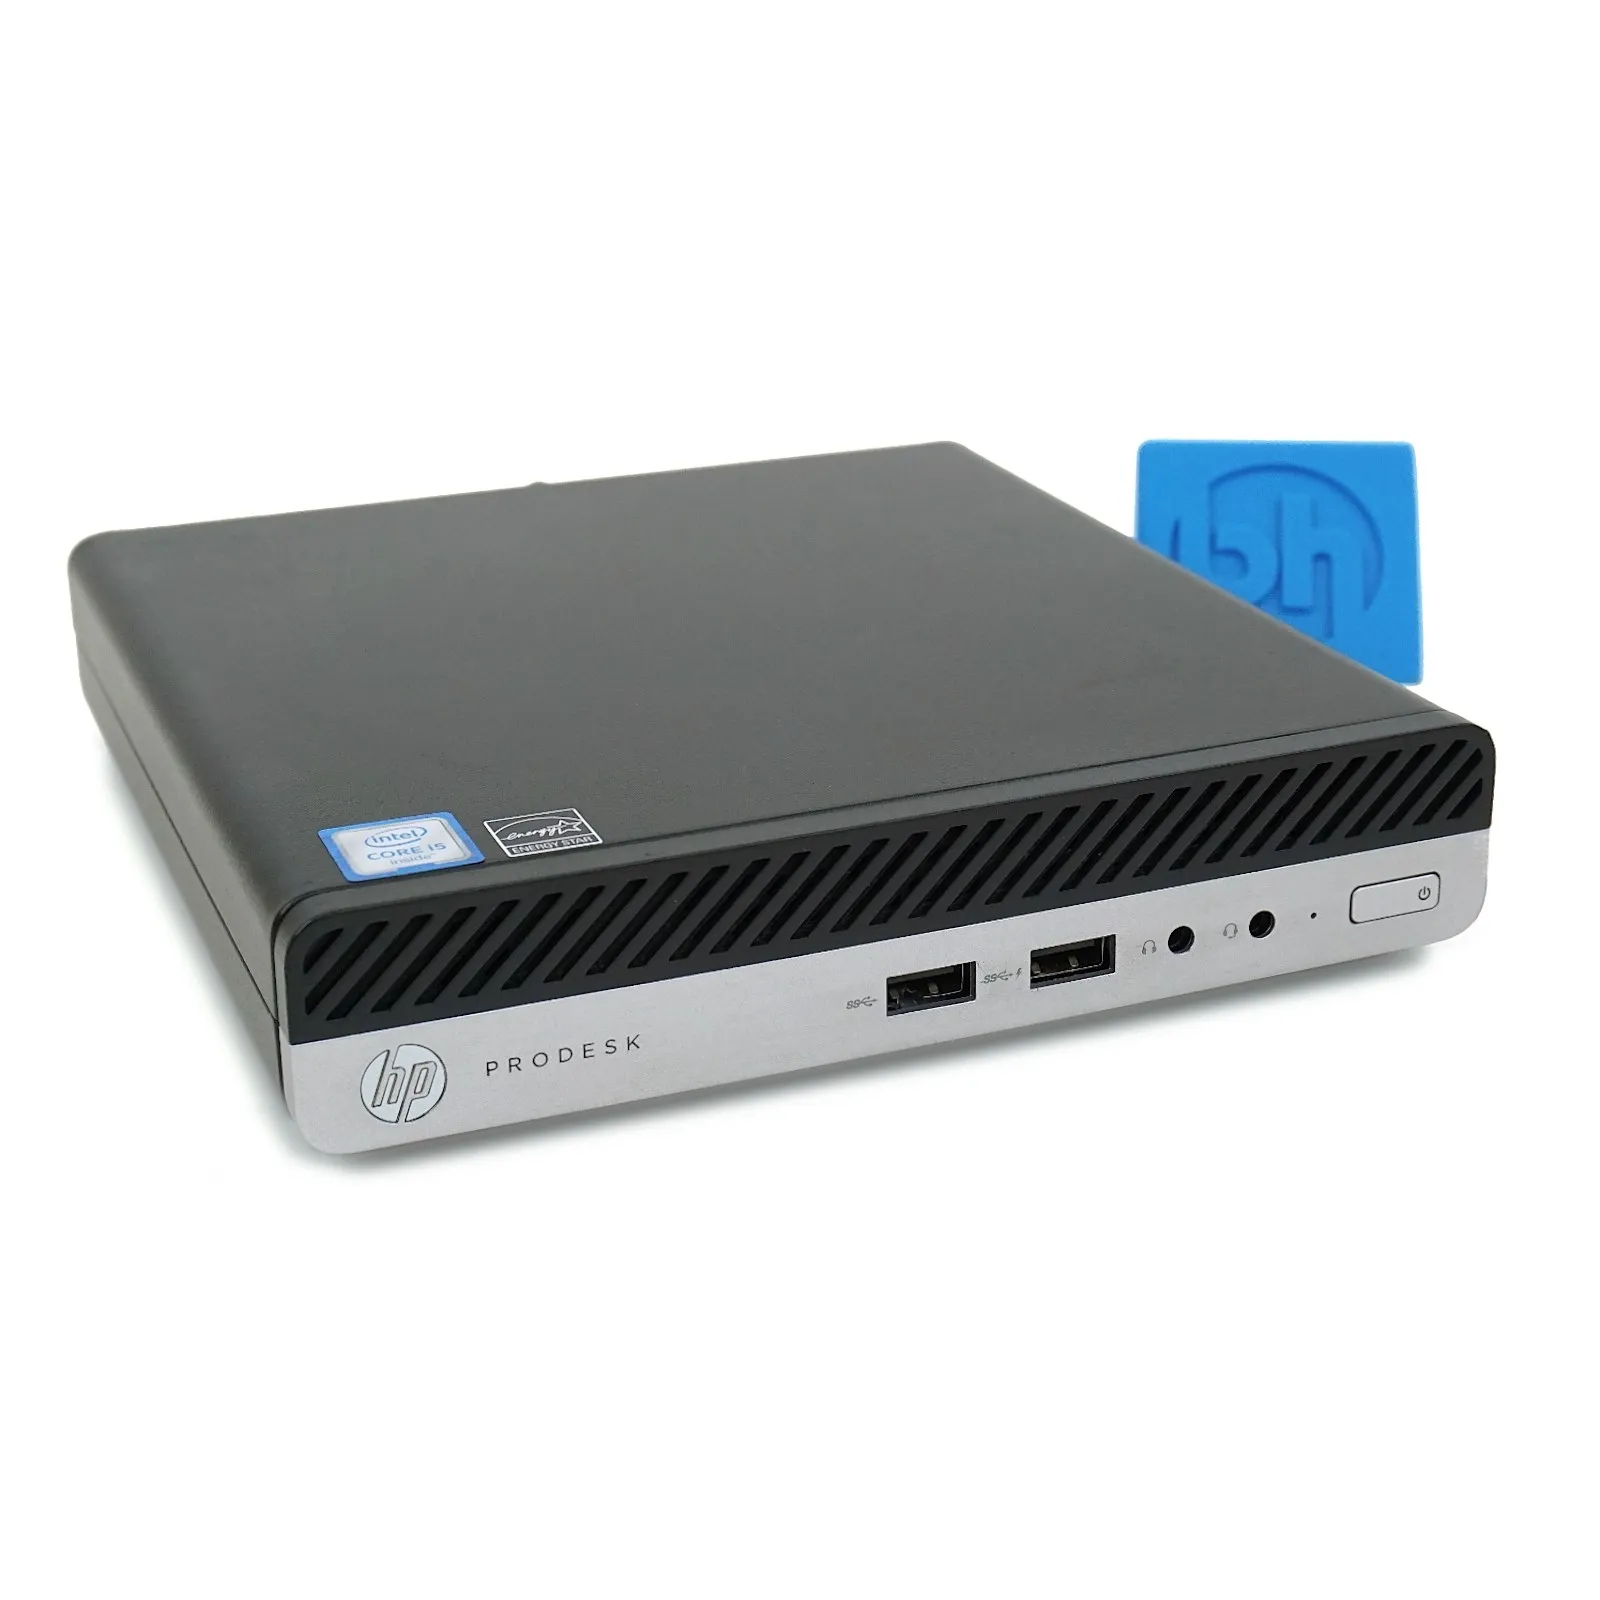 HP ProDesk 400 G3 Mini Pre-Configured Desktop PC